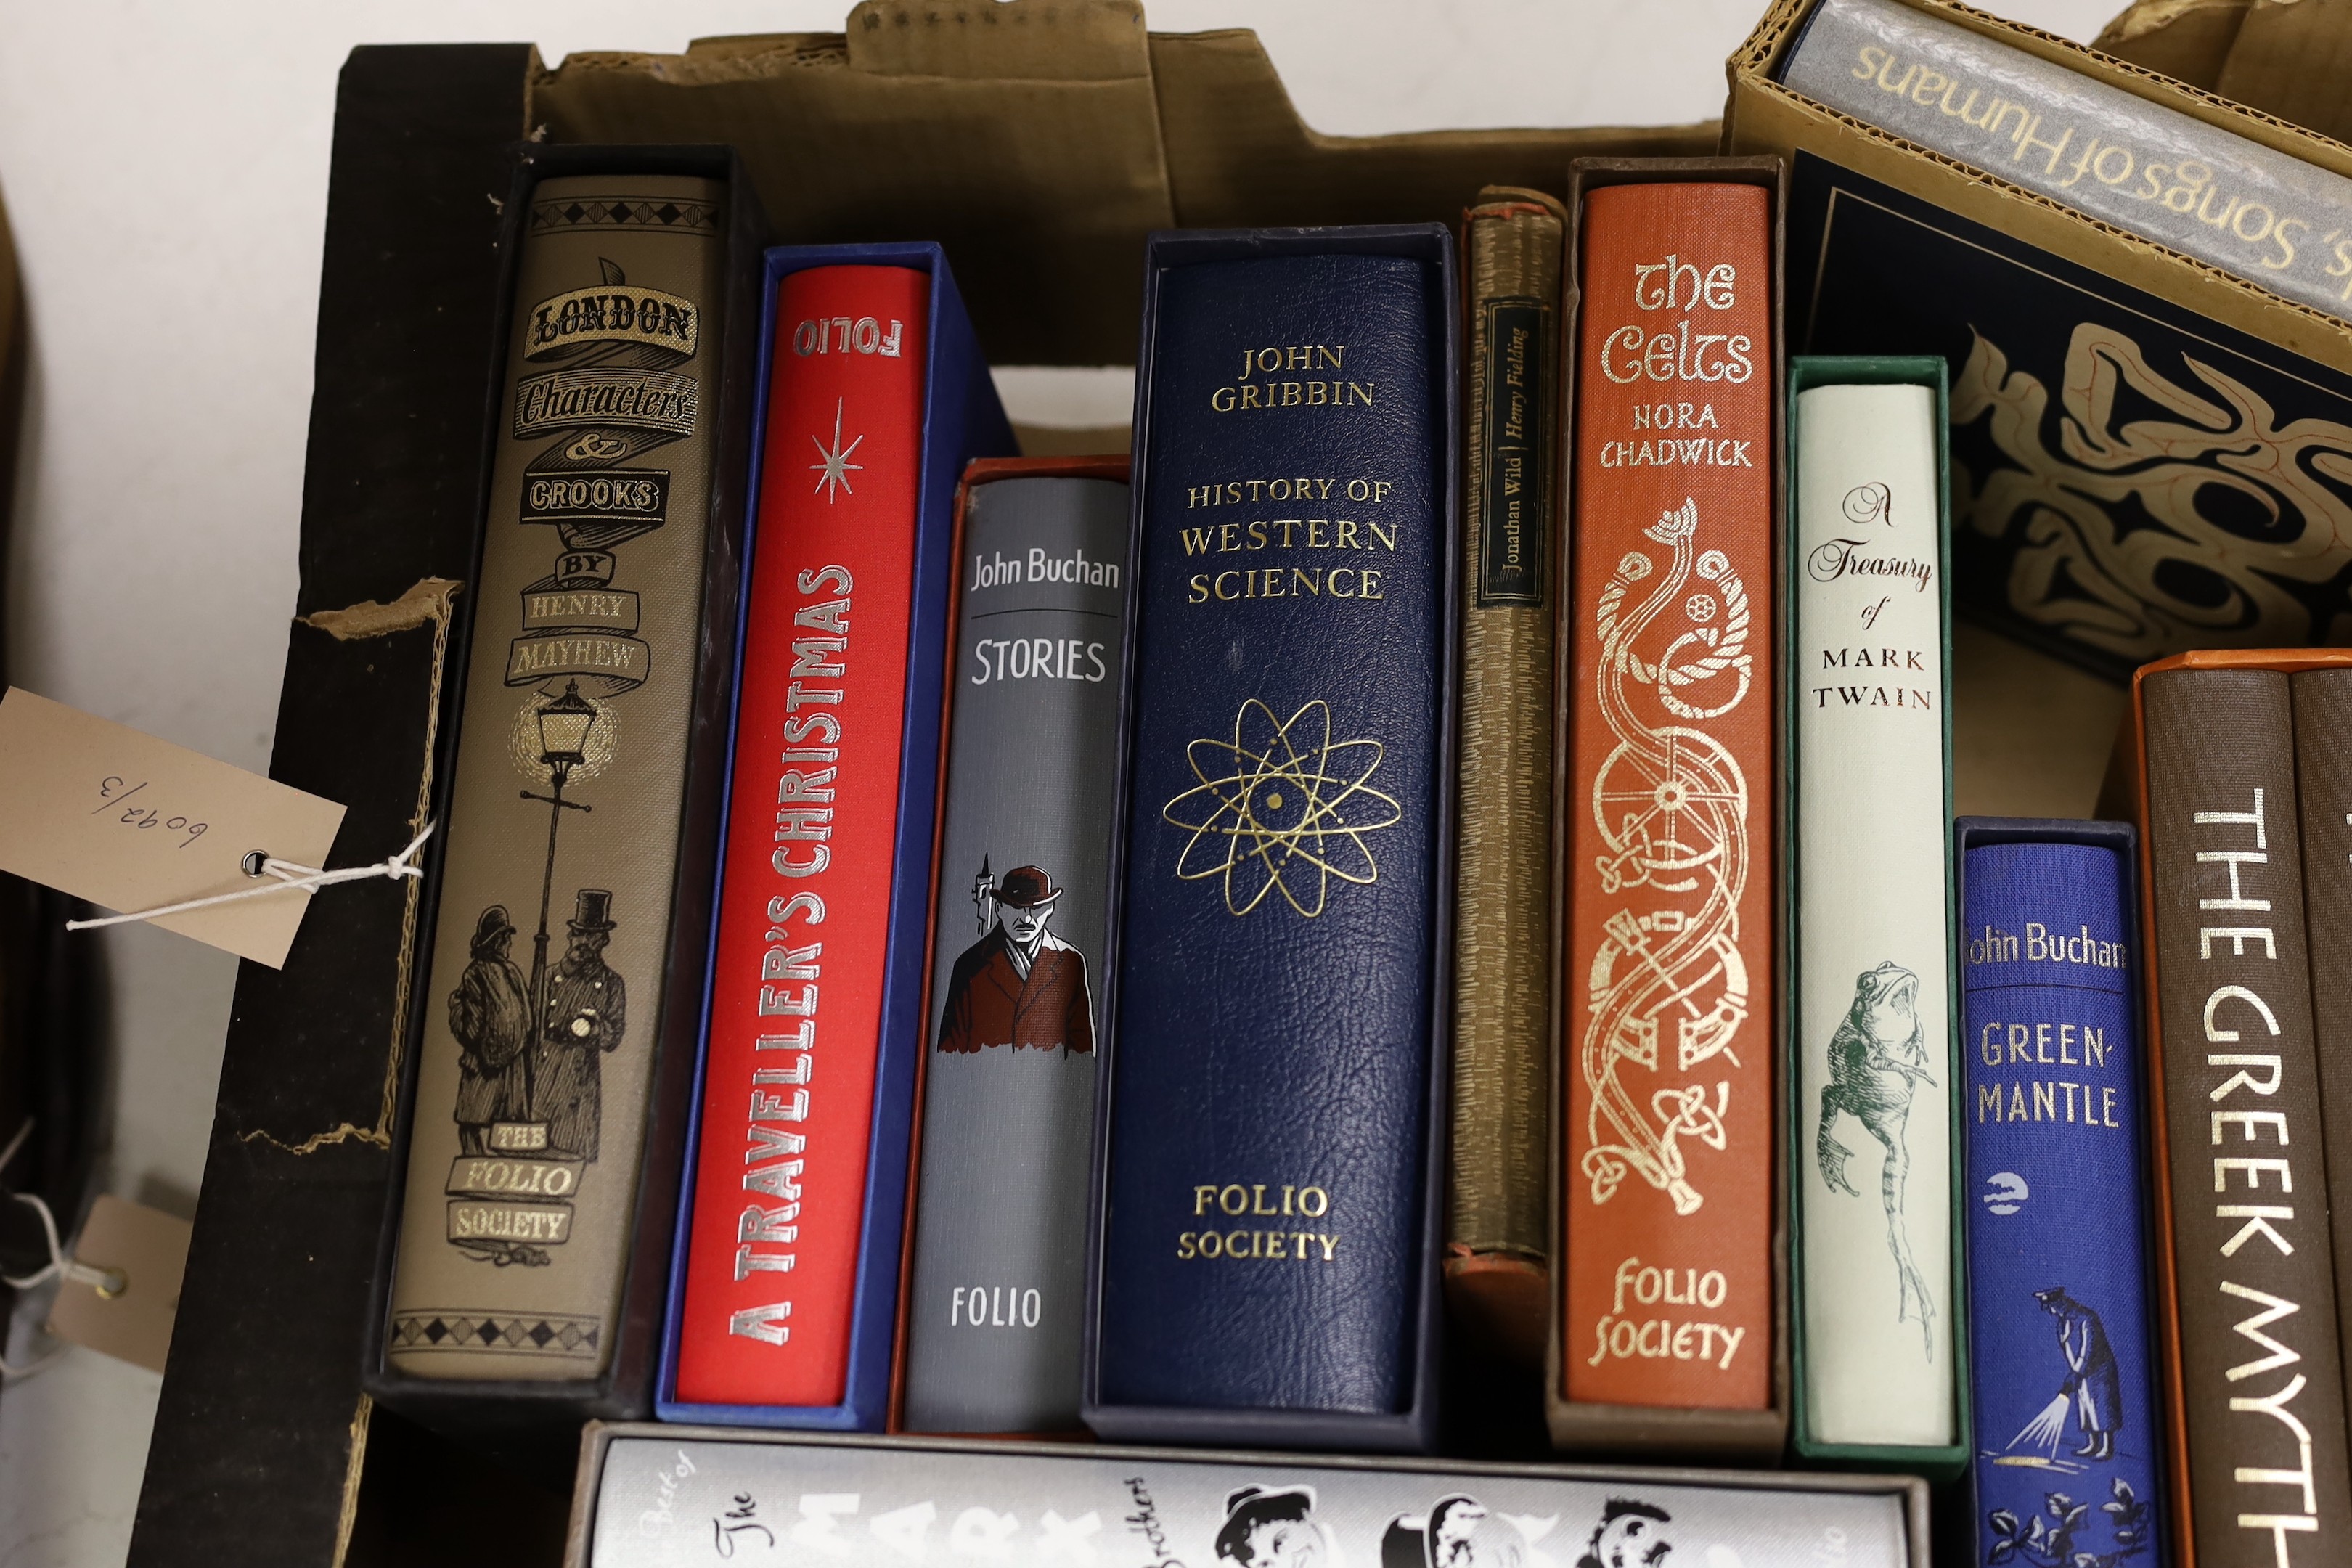 A quantity of folio Society books